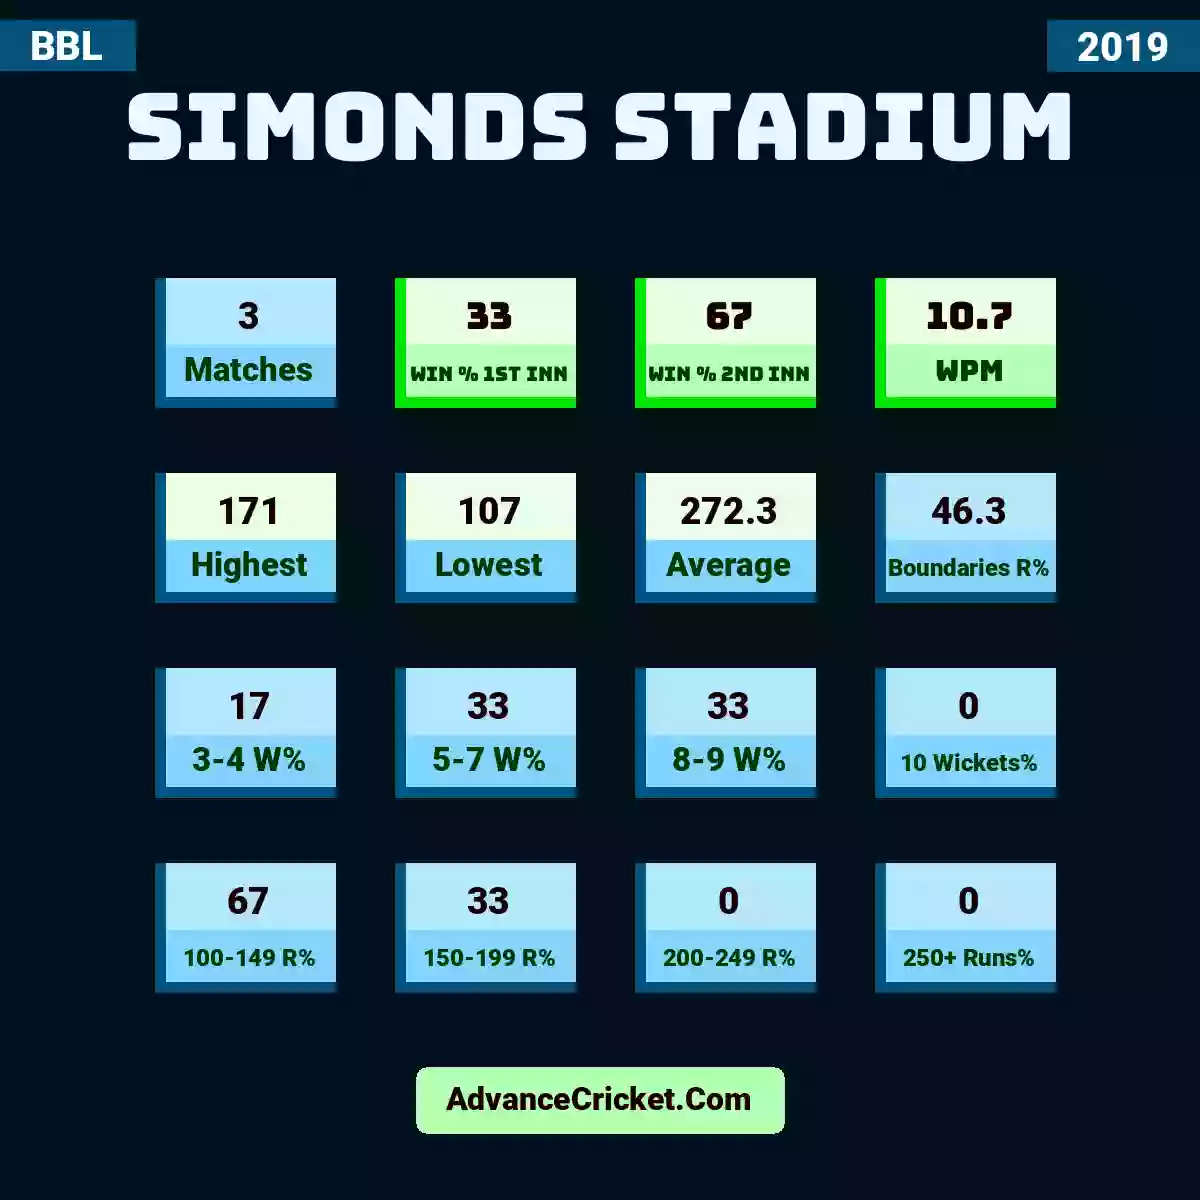 Image showing Simonds Stadium with Matches: 3, Win % 1st Inn: 33, Win % 2nd Inn: 67, WPM: 10.7, Highest: 171, Lowest: 107, Average: 272.3, Boundaries R%: 46.3, 3-4 W%: 17, 5-7 W%: 33, 8-9 W%: 33, 10 Wickets%: 0, 100-149 R%: 67, 150-199 R%: 33, 200-249 R%: 0, 250+ Runs%: 0.